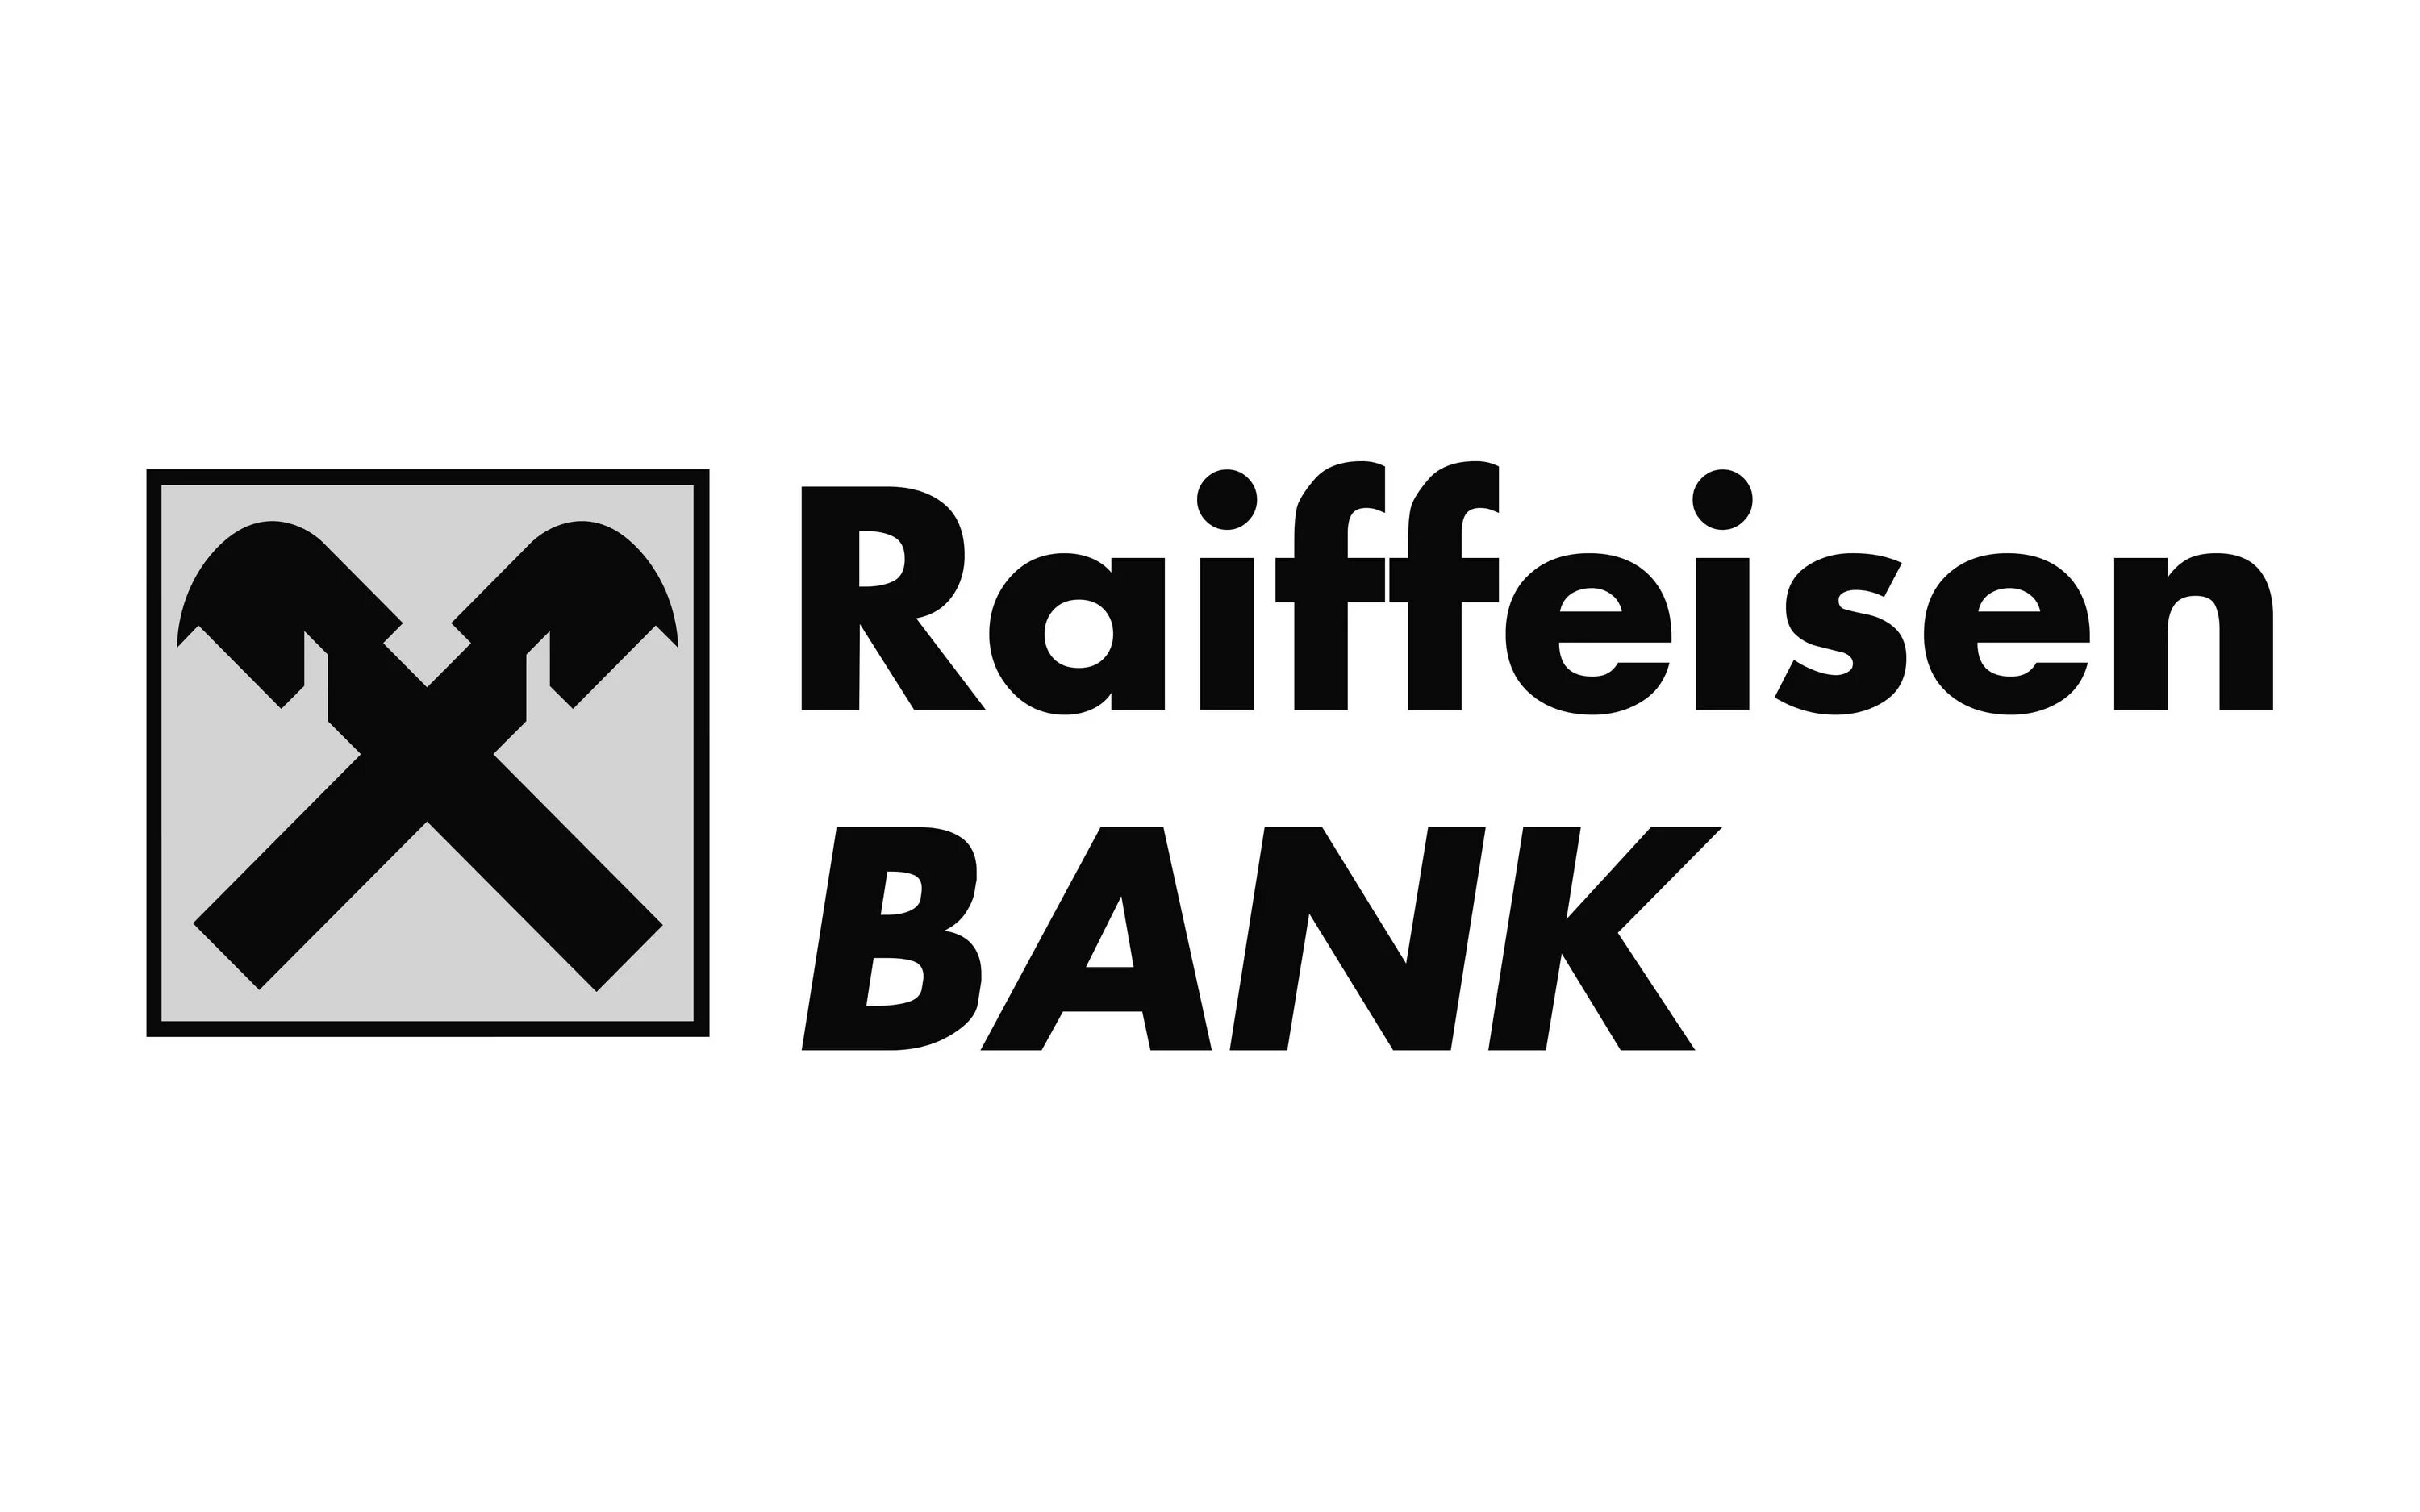 Райффайзен бик. Райффайзенбанк лого. Значок Райффайзен банка. Raiffeisen Bank logo White. Райффайзенбанк логотип без фона.